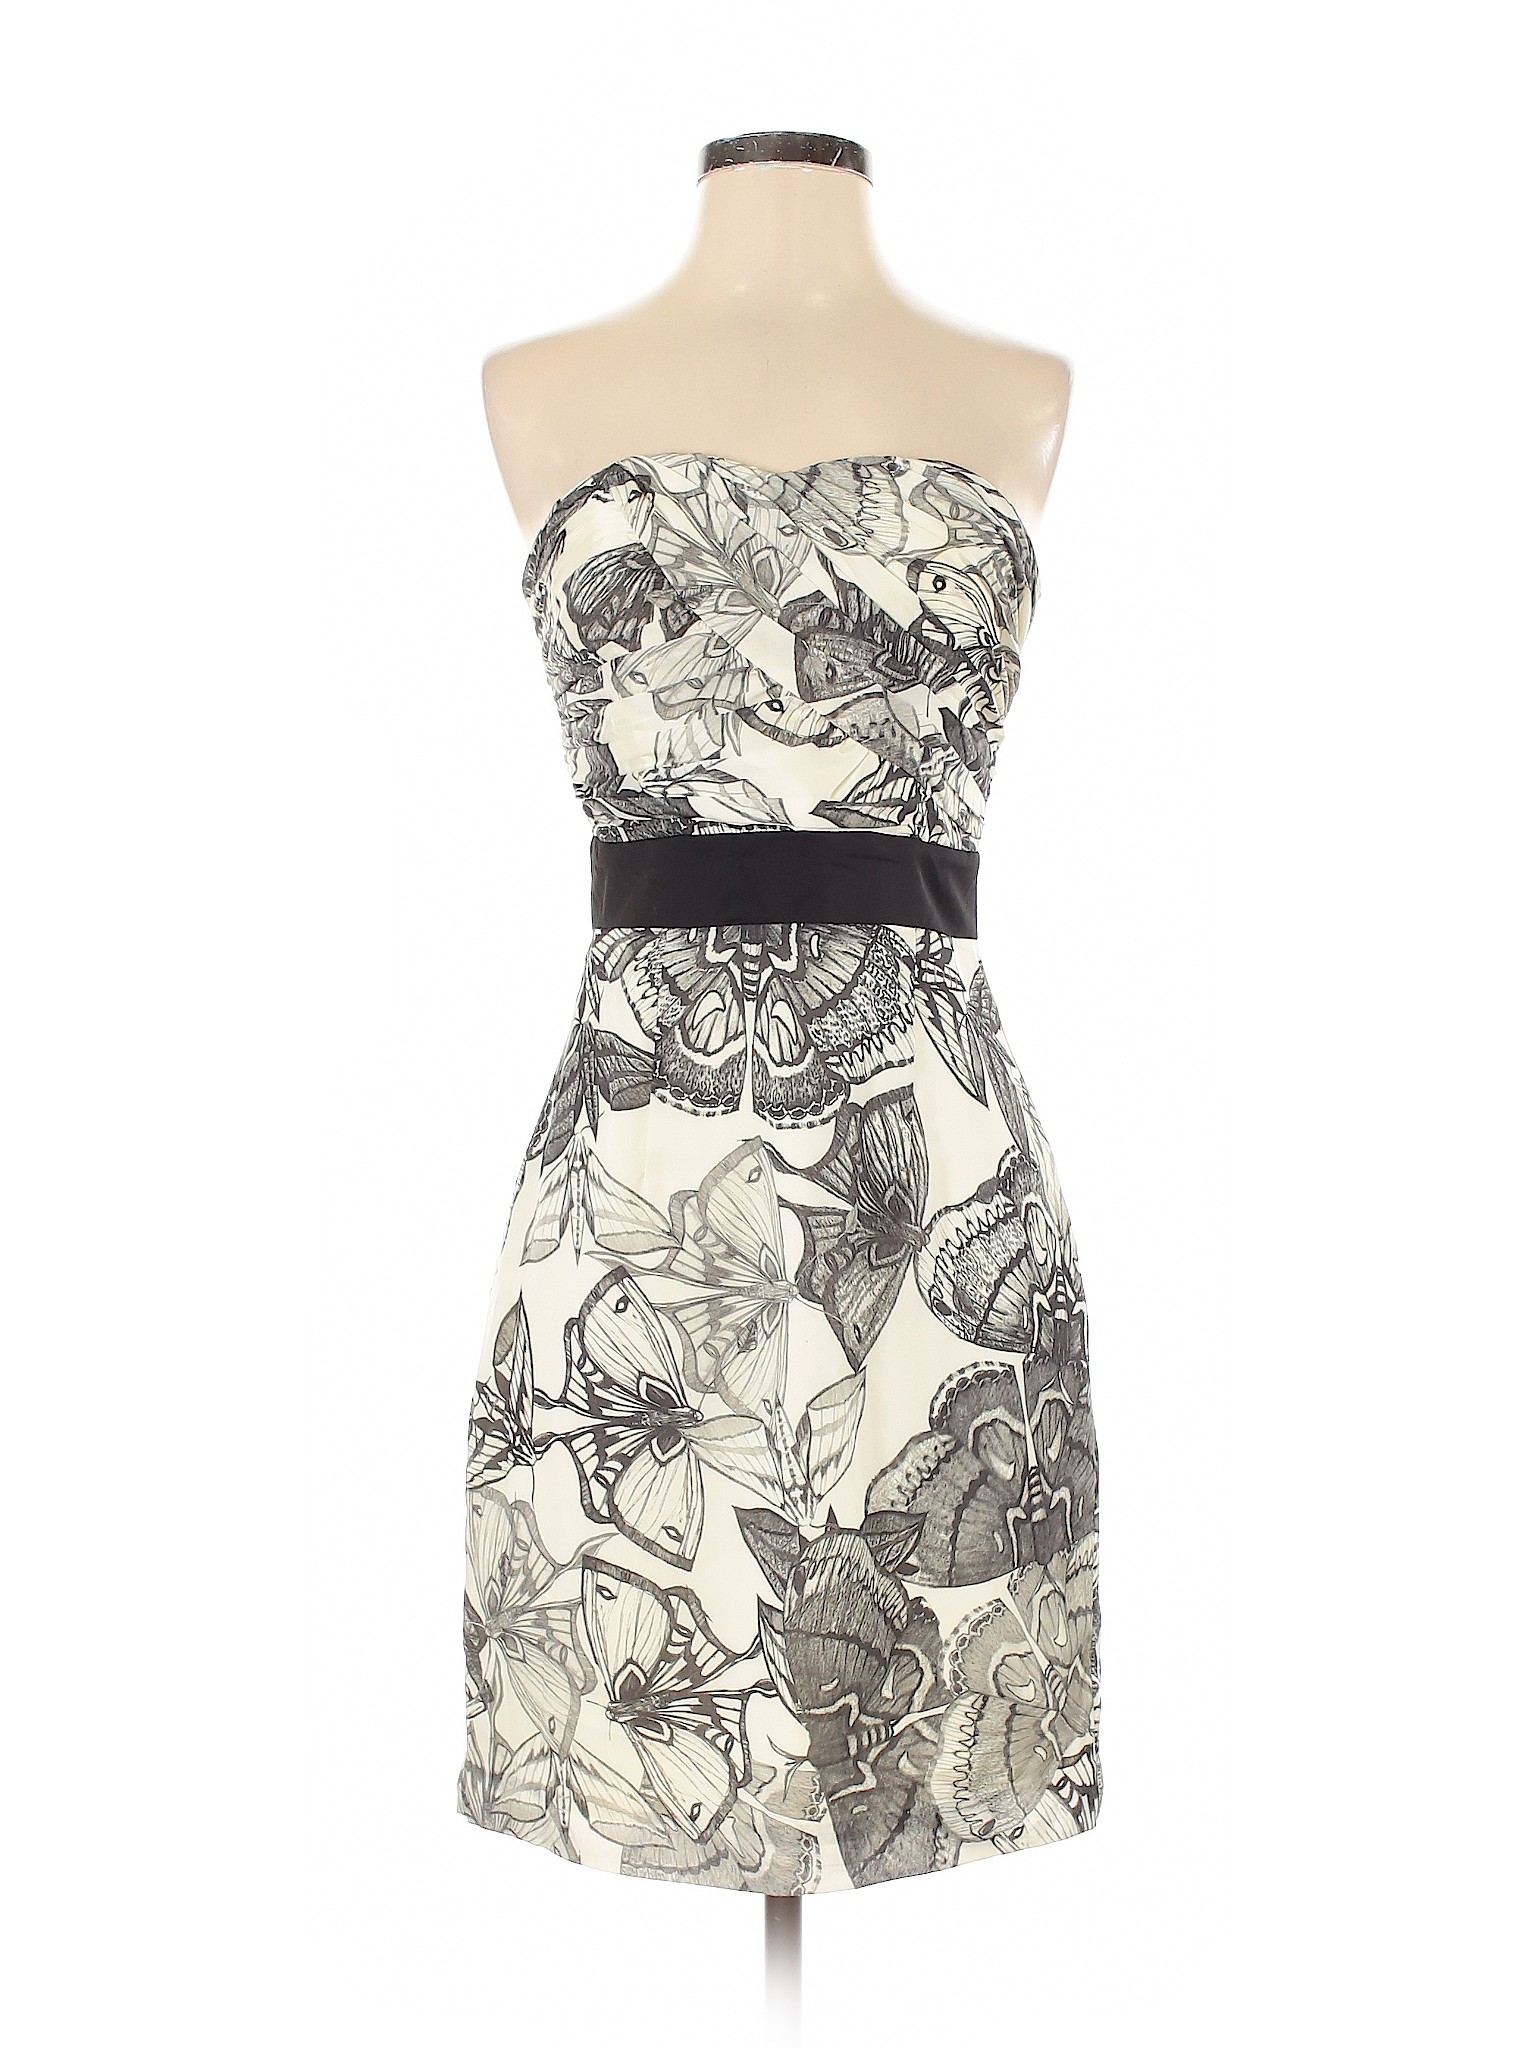 H&M Women Ivory Cocktail Dress 6 | eBay